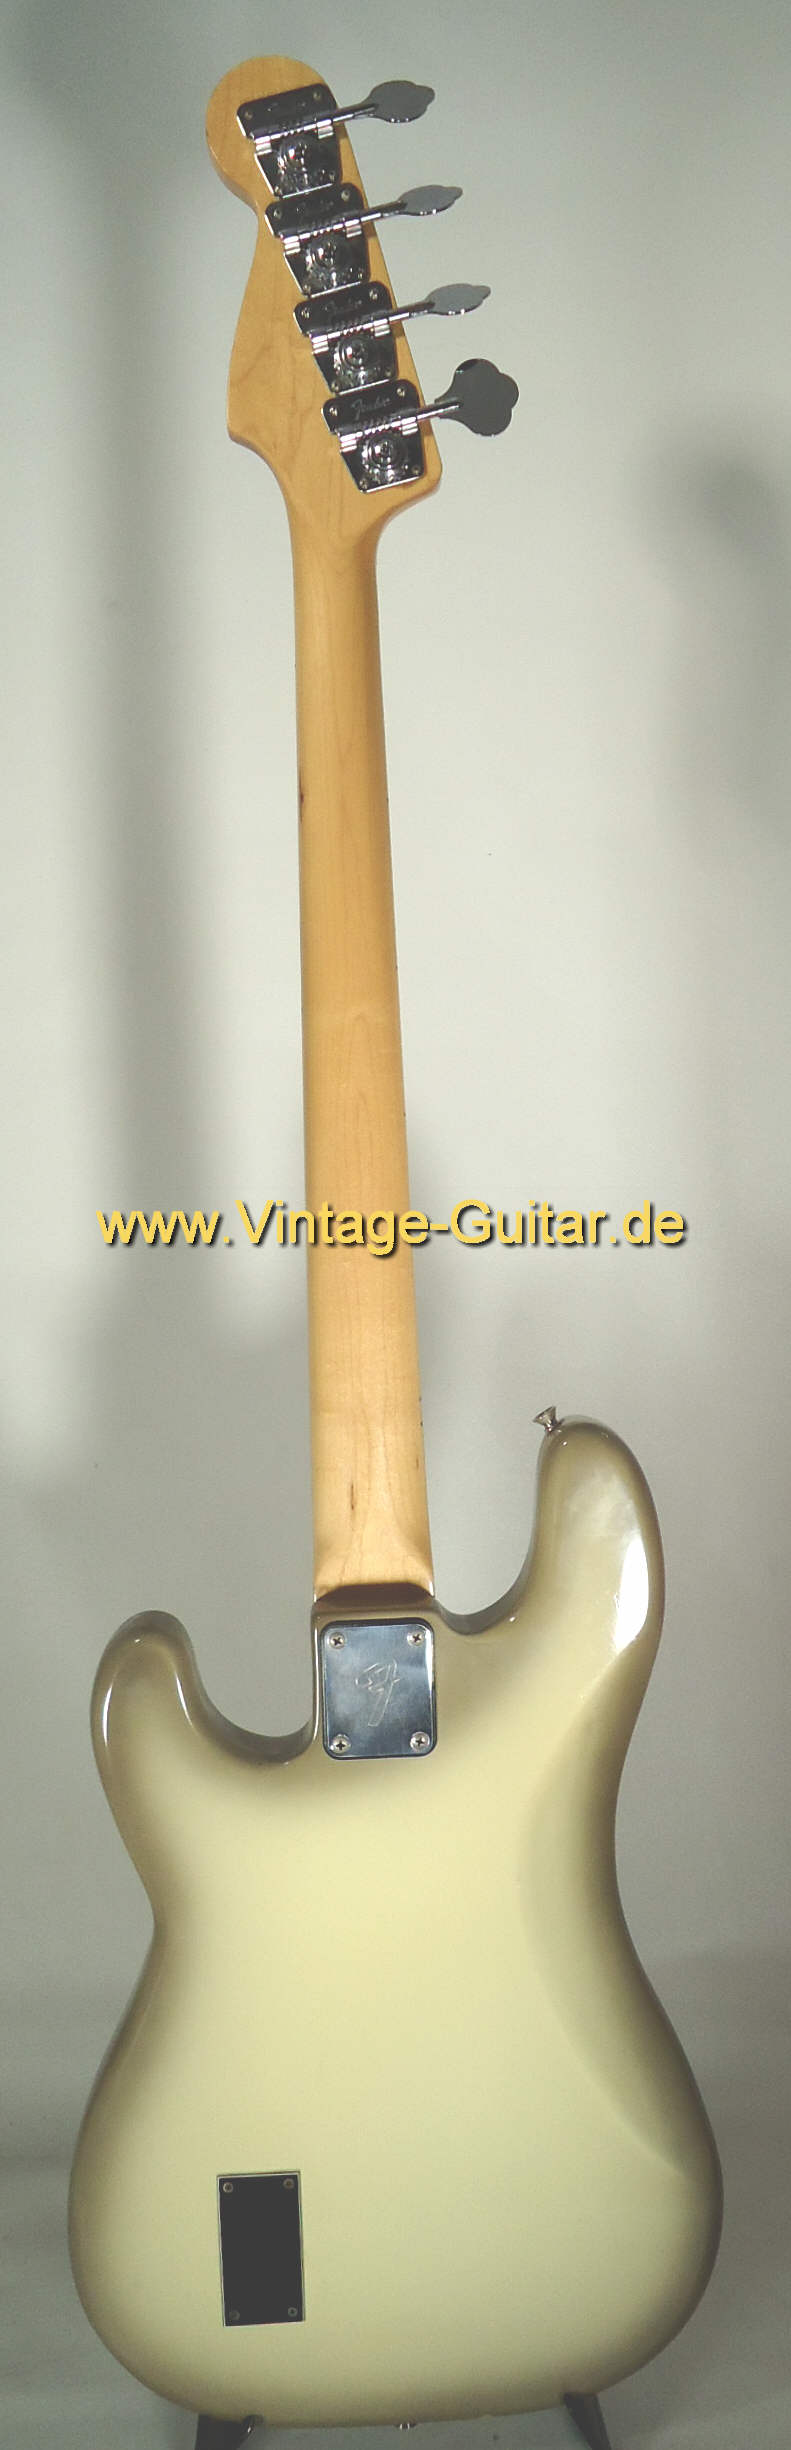 Fender Precision Bass 1978 antigua b.jpg